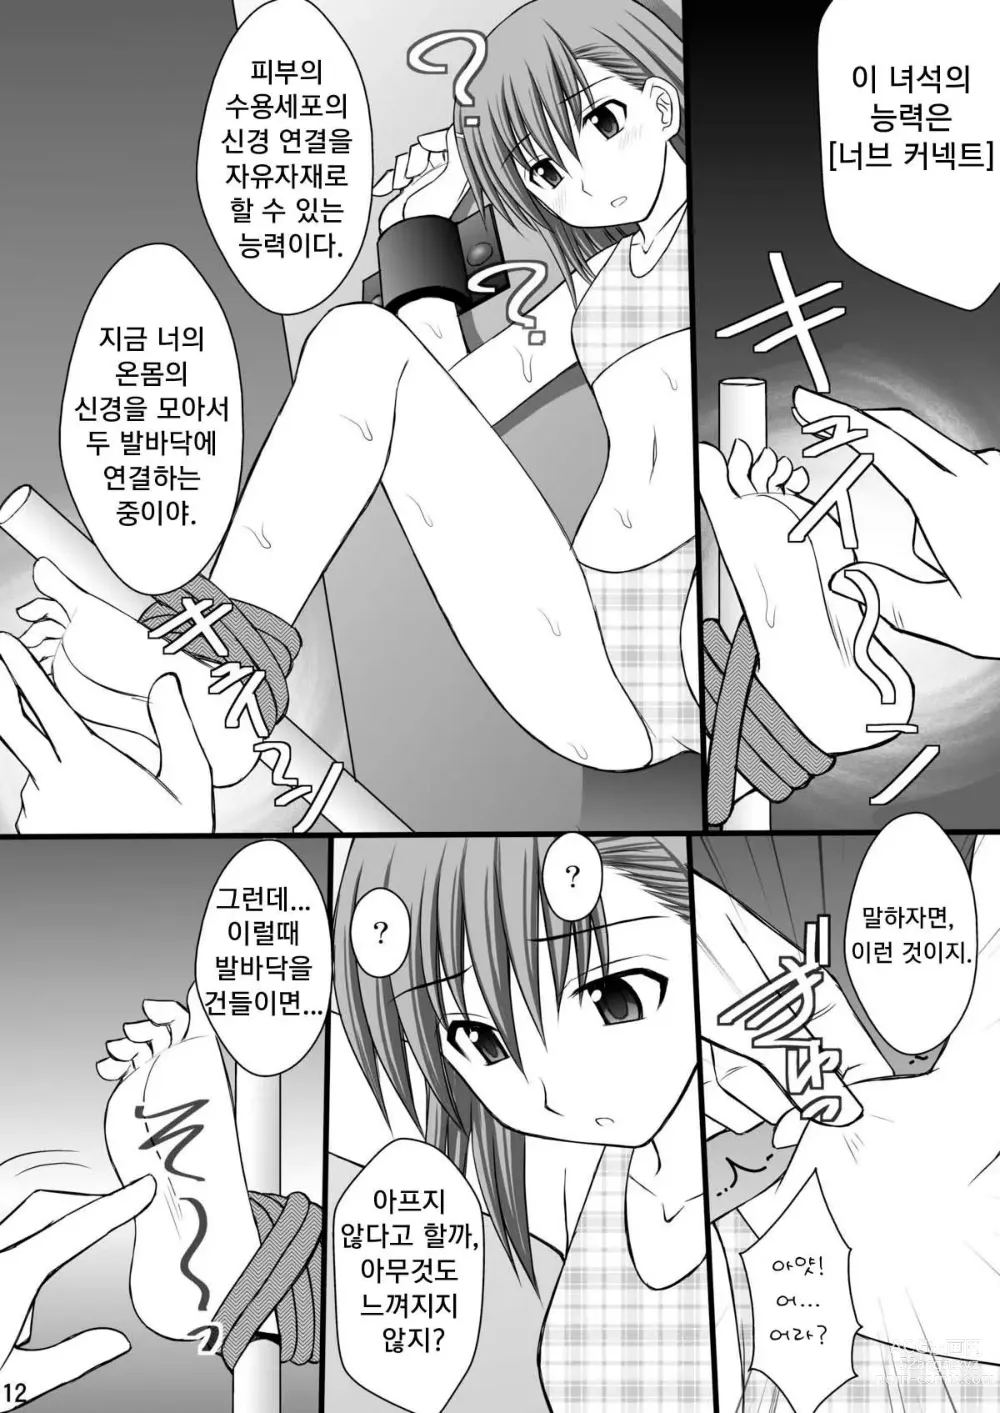 Page 9 of doujinshi 정신붕괴 할 때까지 간지럽히고 능욕해보는 테스트 3 미코토 절체절명 암노예편